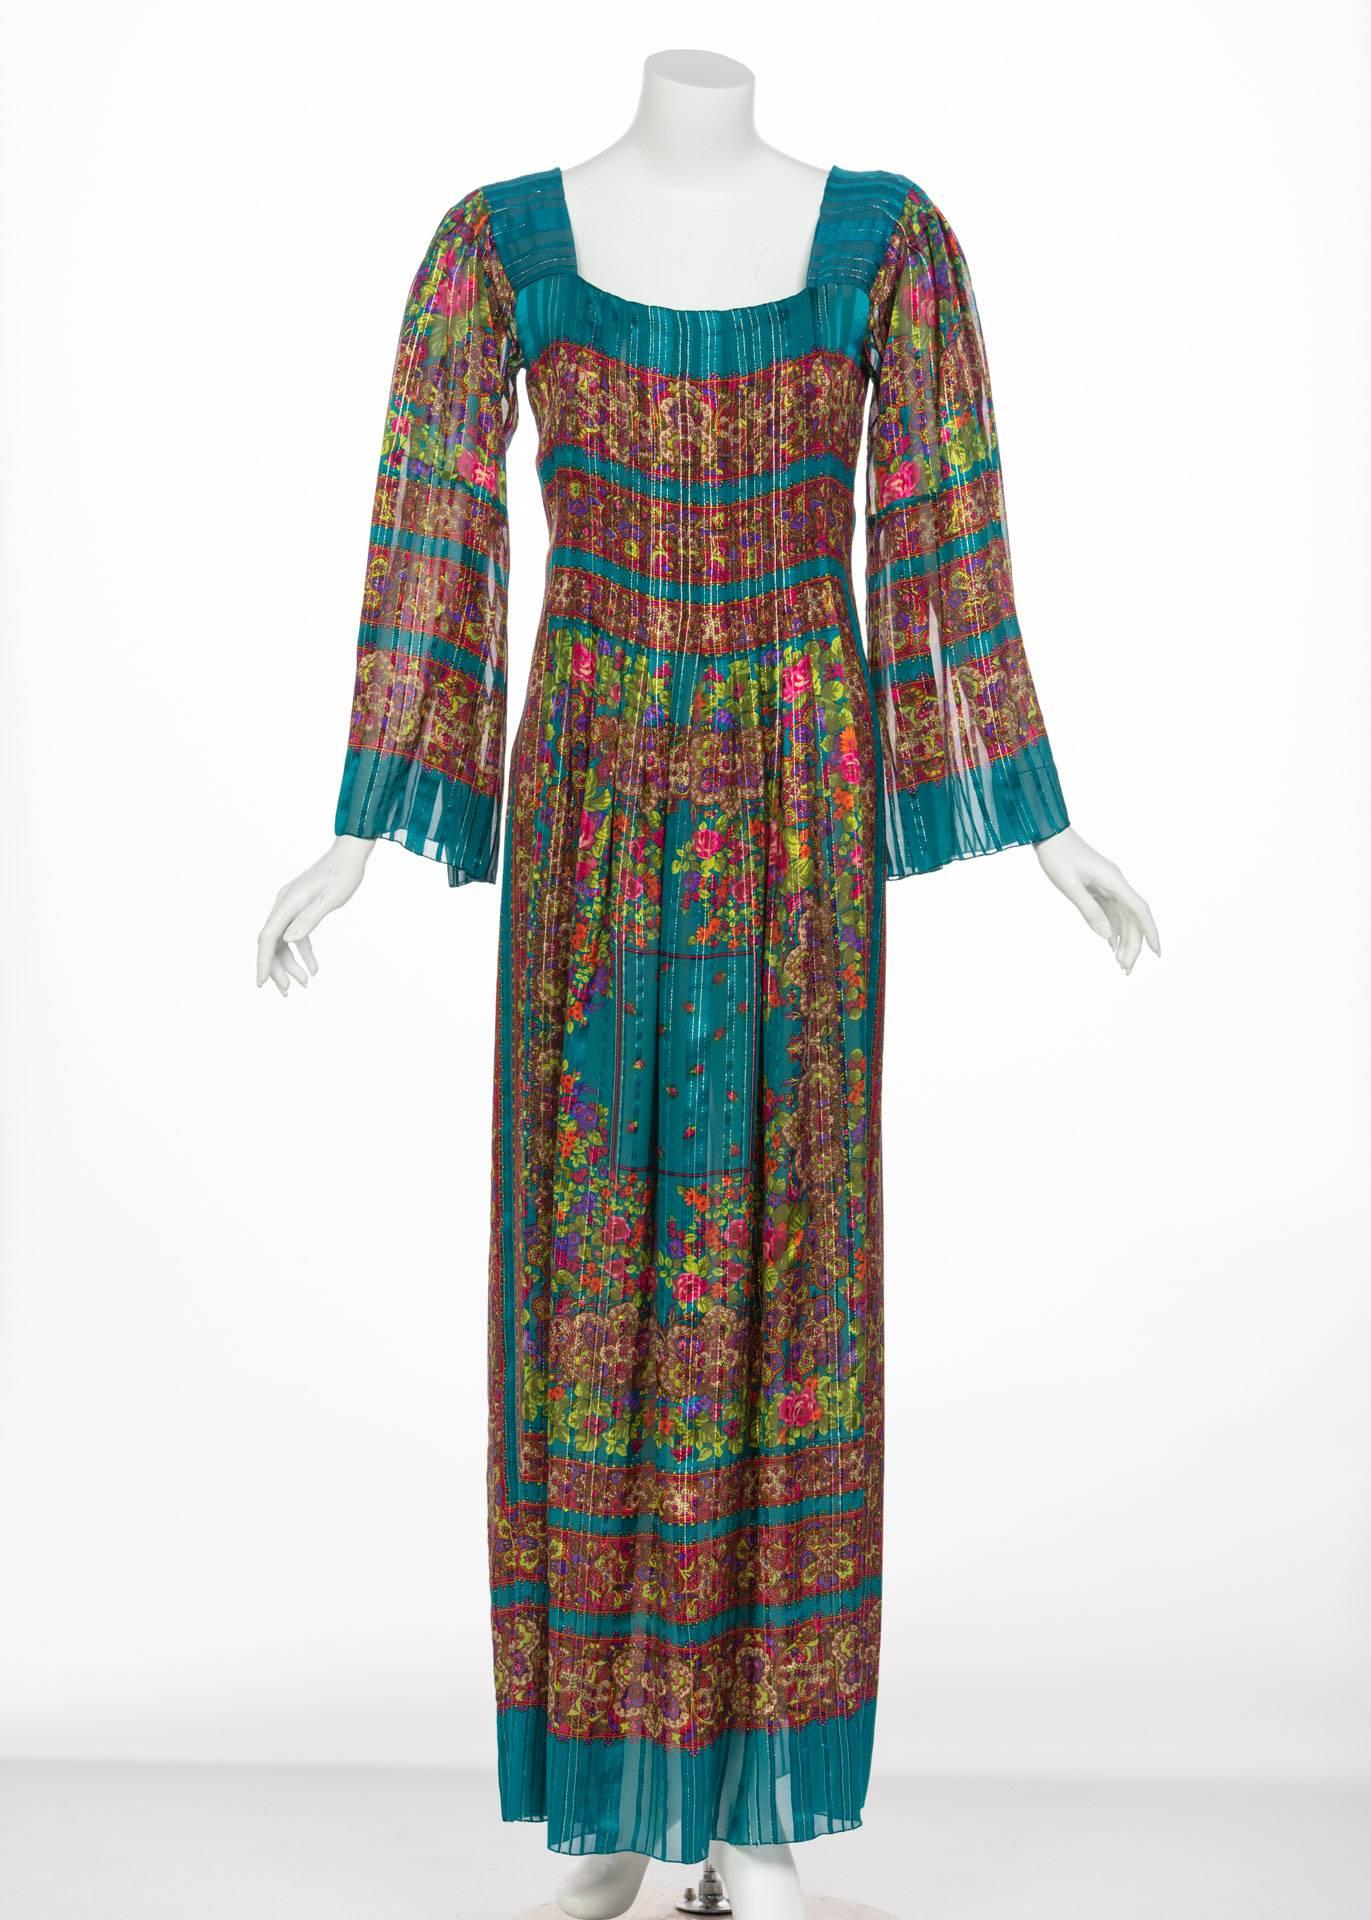 Pauline Trigere Silk Floral Metallic Bell Sleeve Caftan Maxi Dress, 1970s For Sale 3